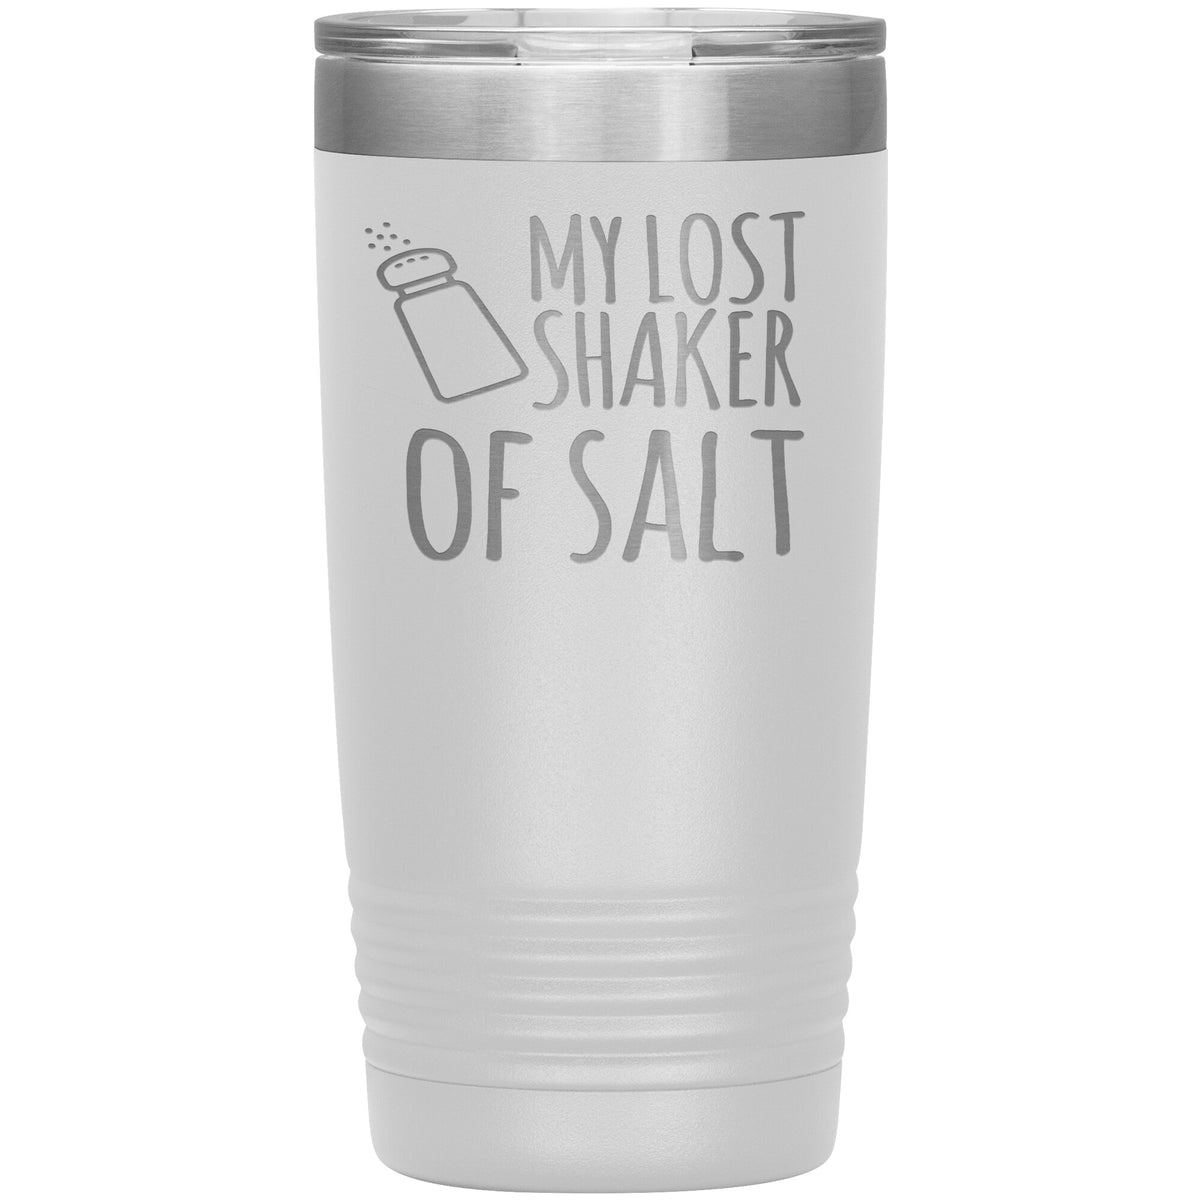 My Lost Shaker of Salt Tumbler